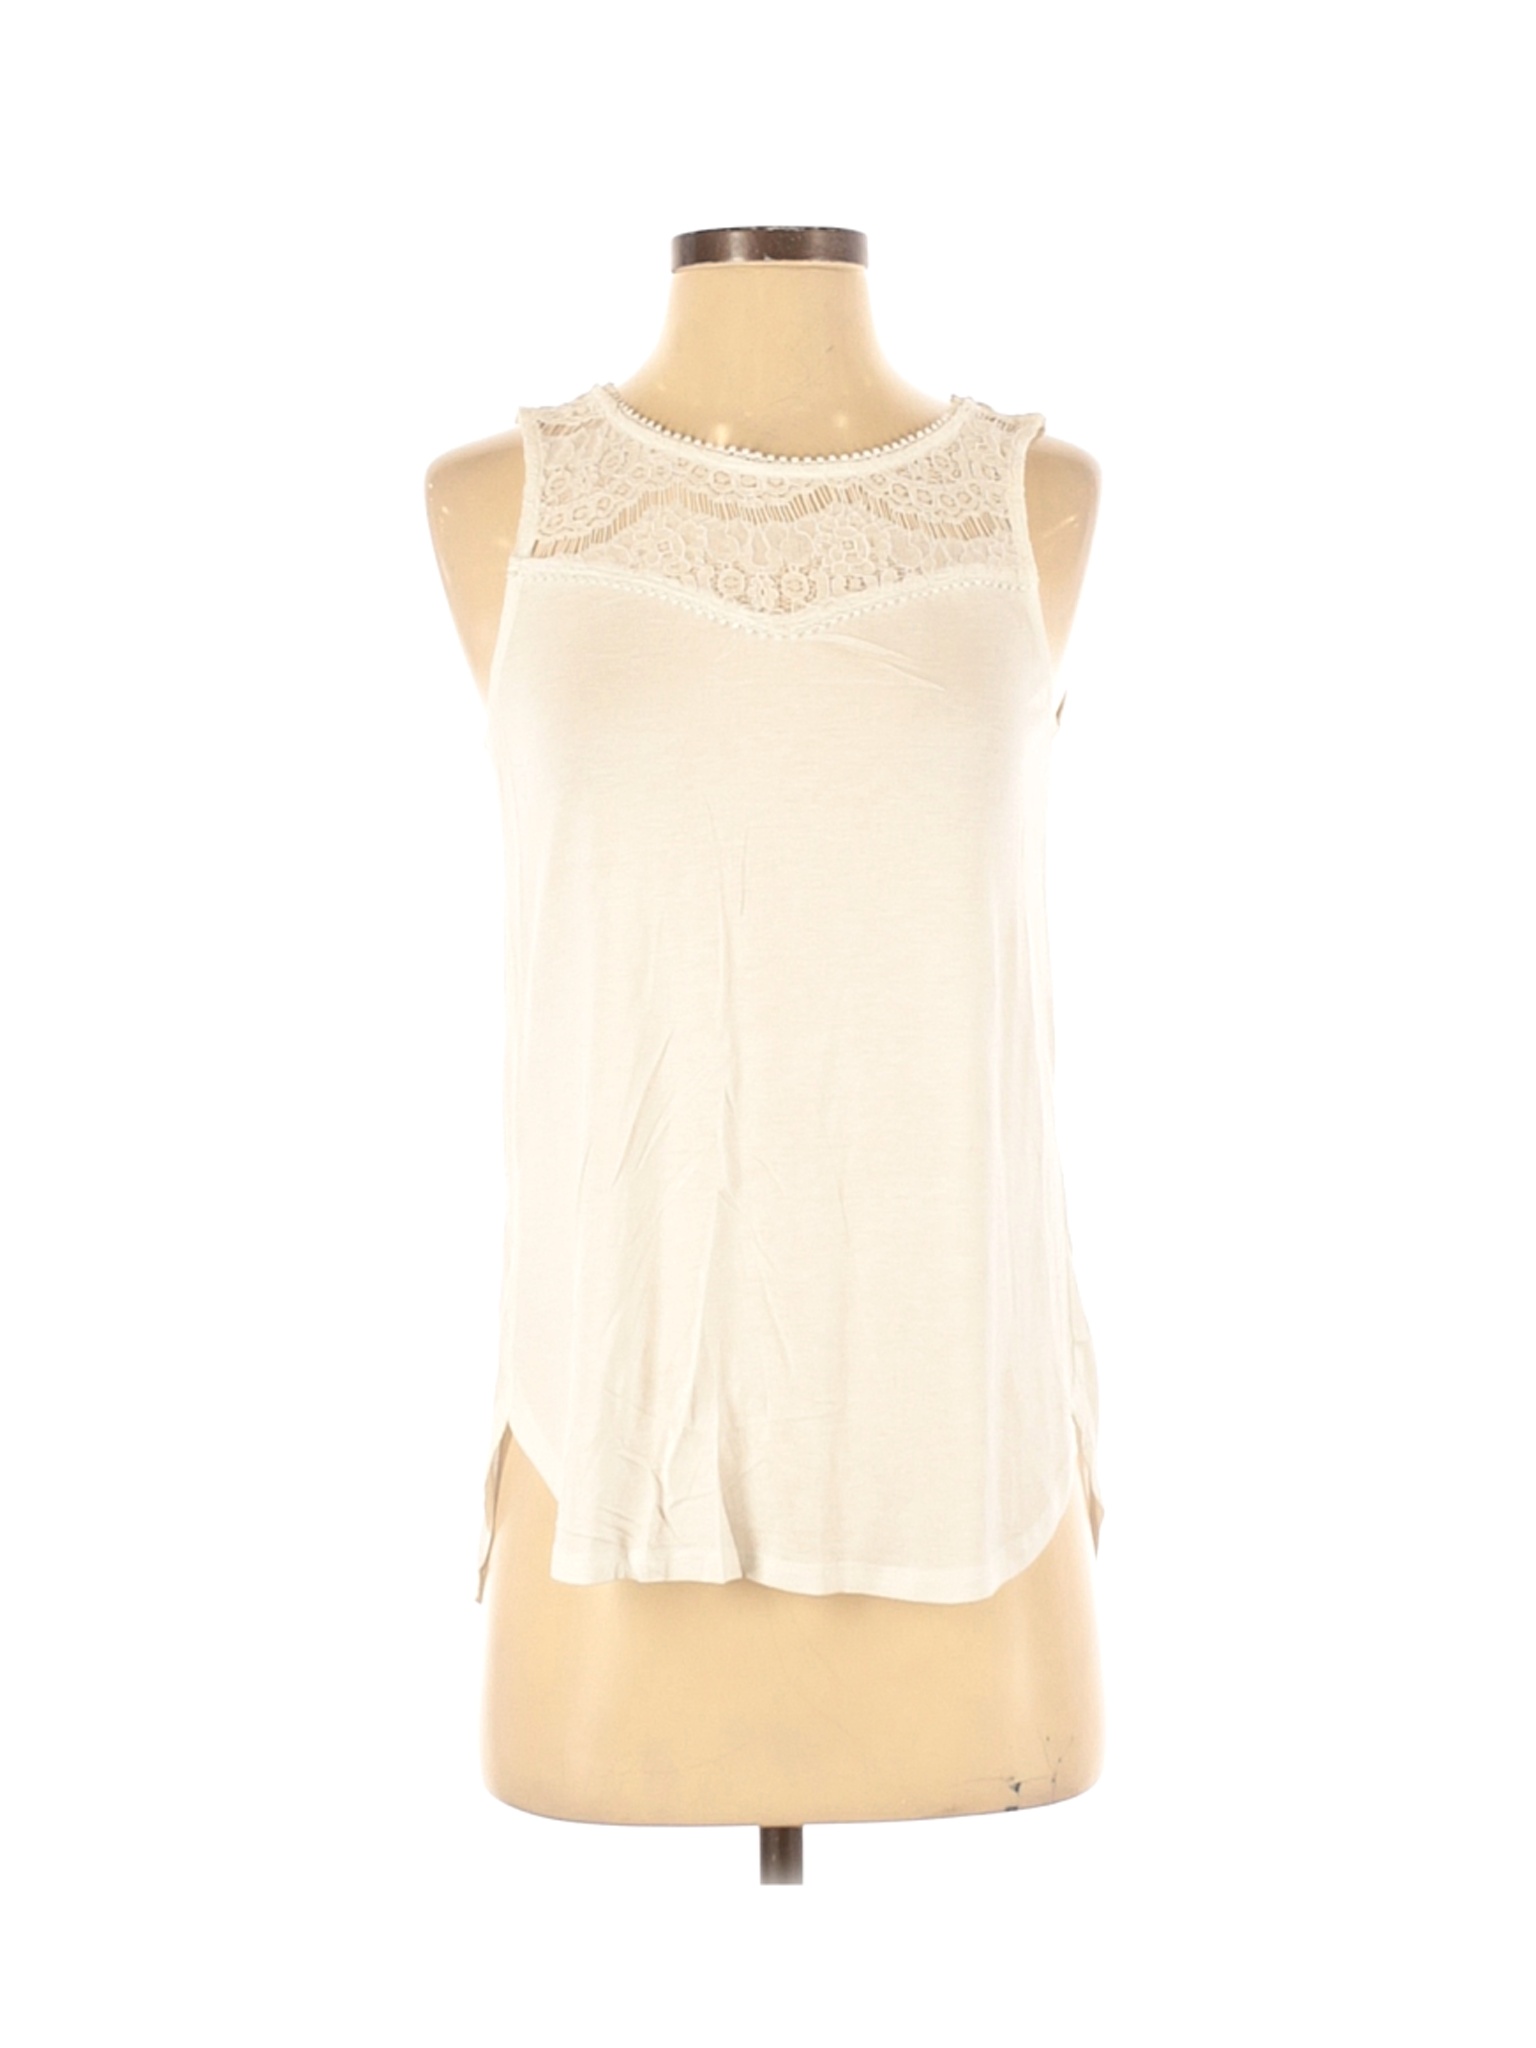 H&M Women Ivory Sleeveless Top XS | eBay